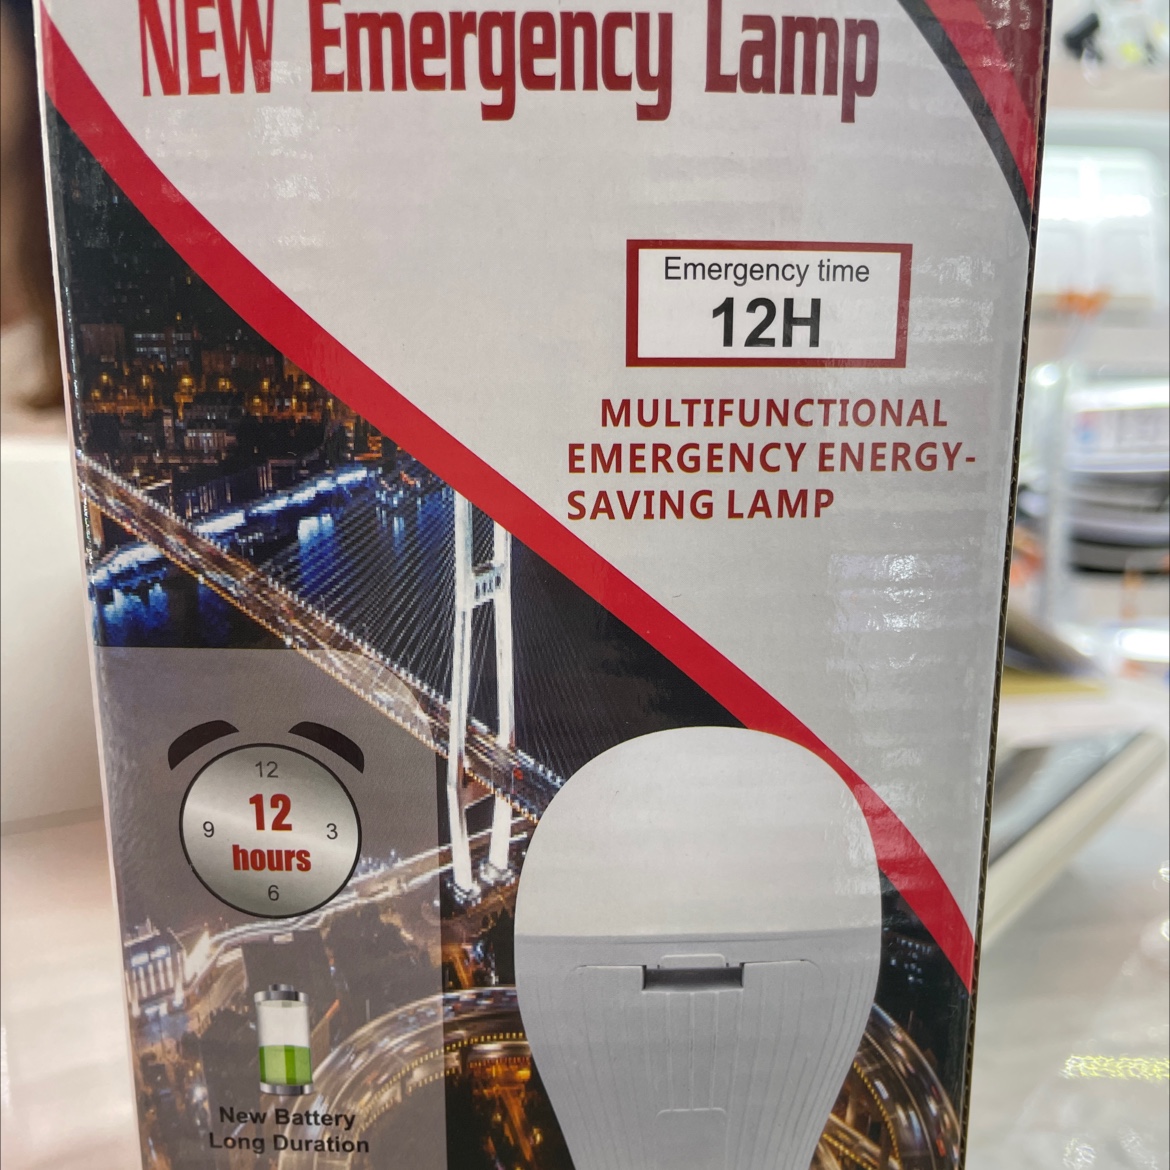 New emergency Lamp1
图